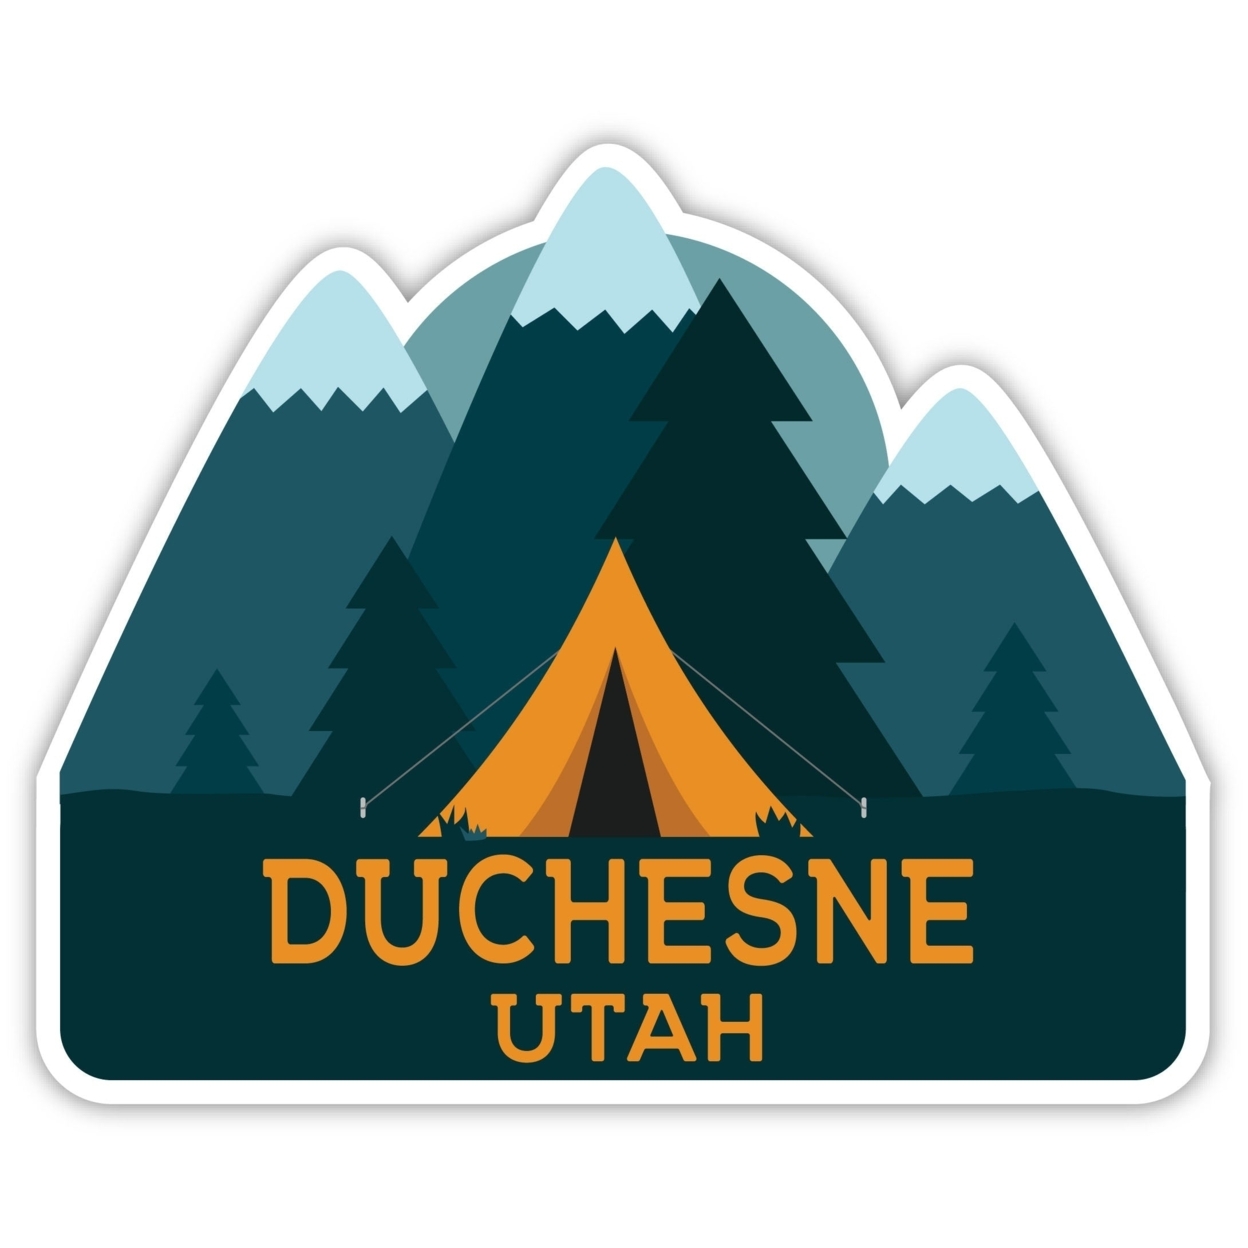 Duchesne Utah Souvenir Decorative Stickers (Choose Theme And Size) - 4-Pack, 12-Inch, Tent